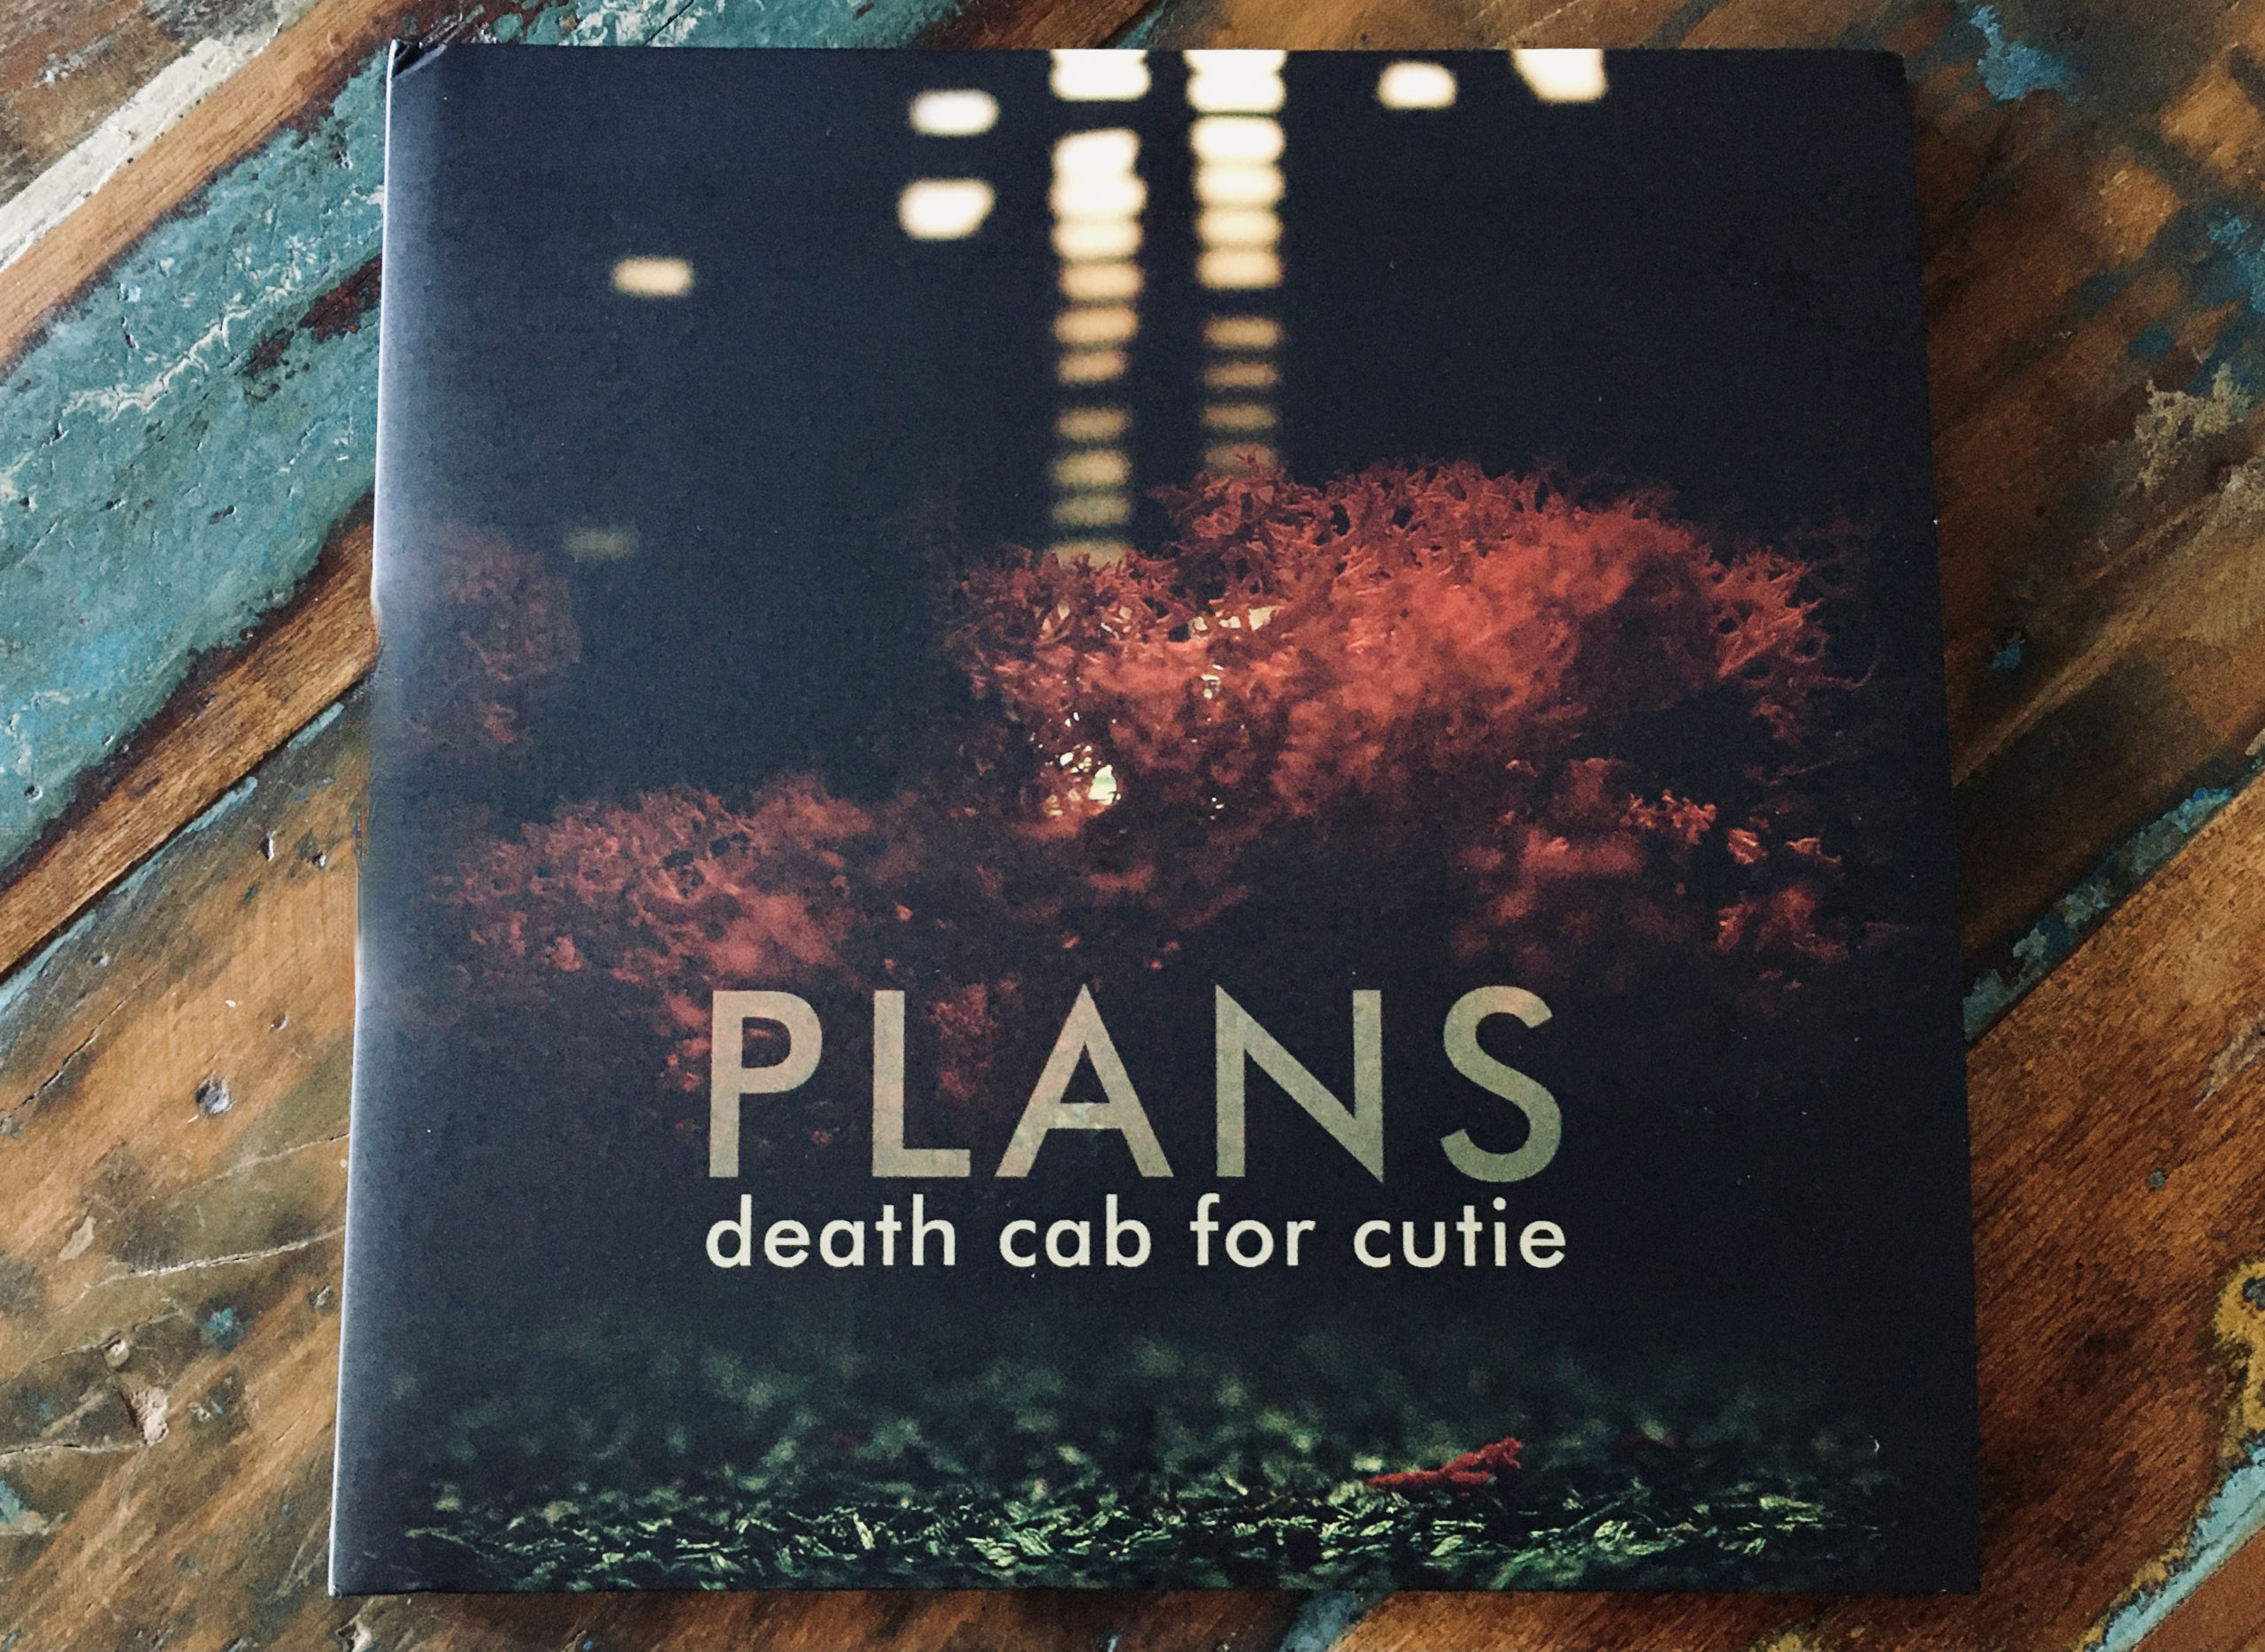 Death cab for cutie